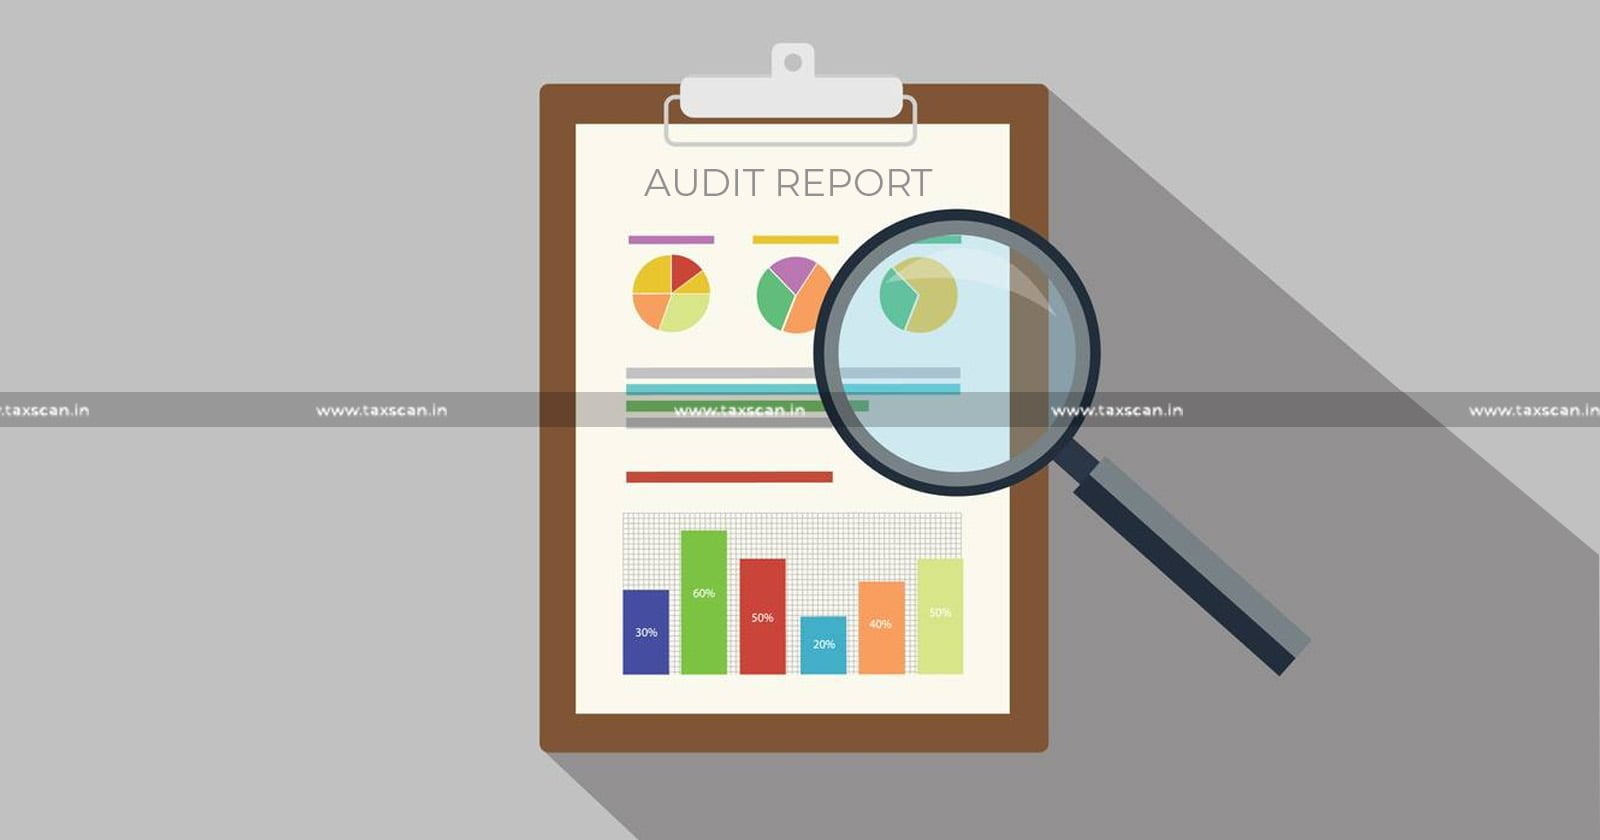 ITAT -Failure -Audit Report- Accounts -Cooperative Department -Auditor-income tax-taxscan